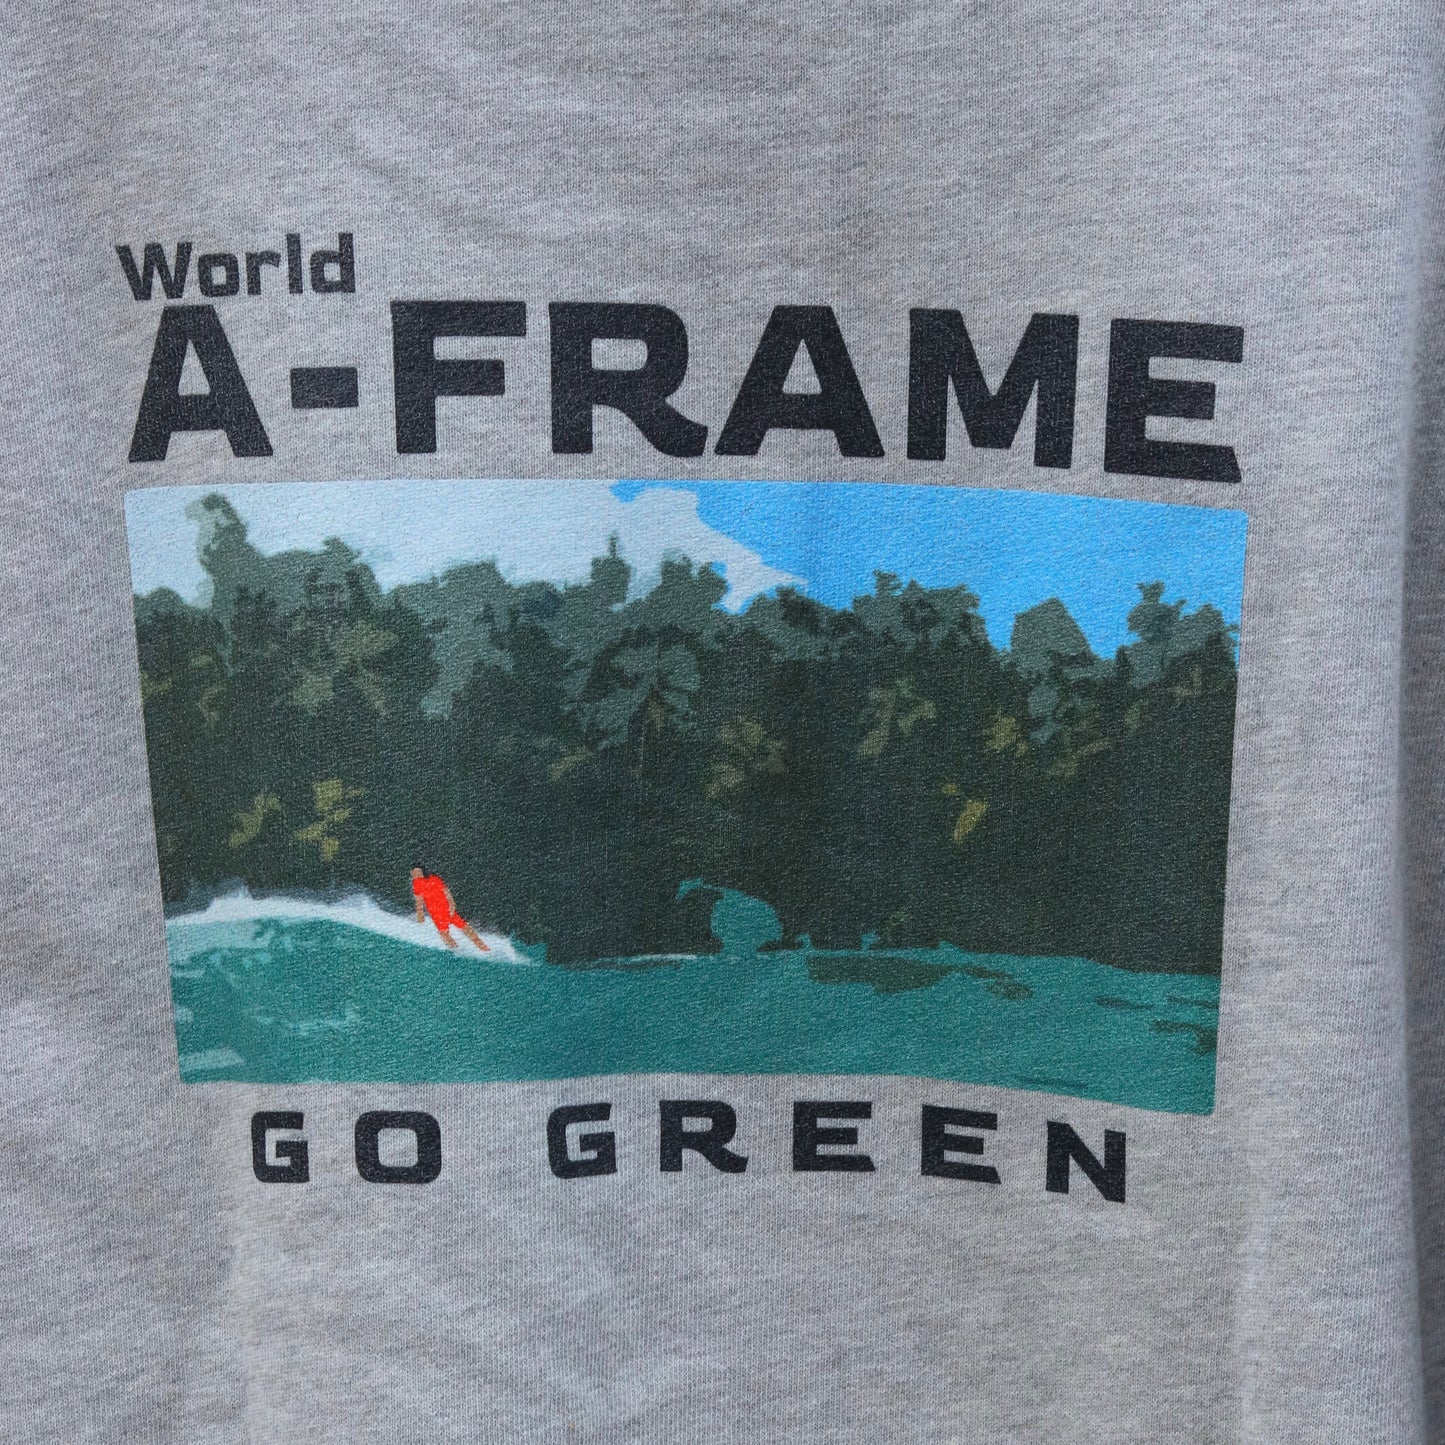 A-frame Go Green トレーナー グレー 裏起毛トレーナー 暖かくて速乾